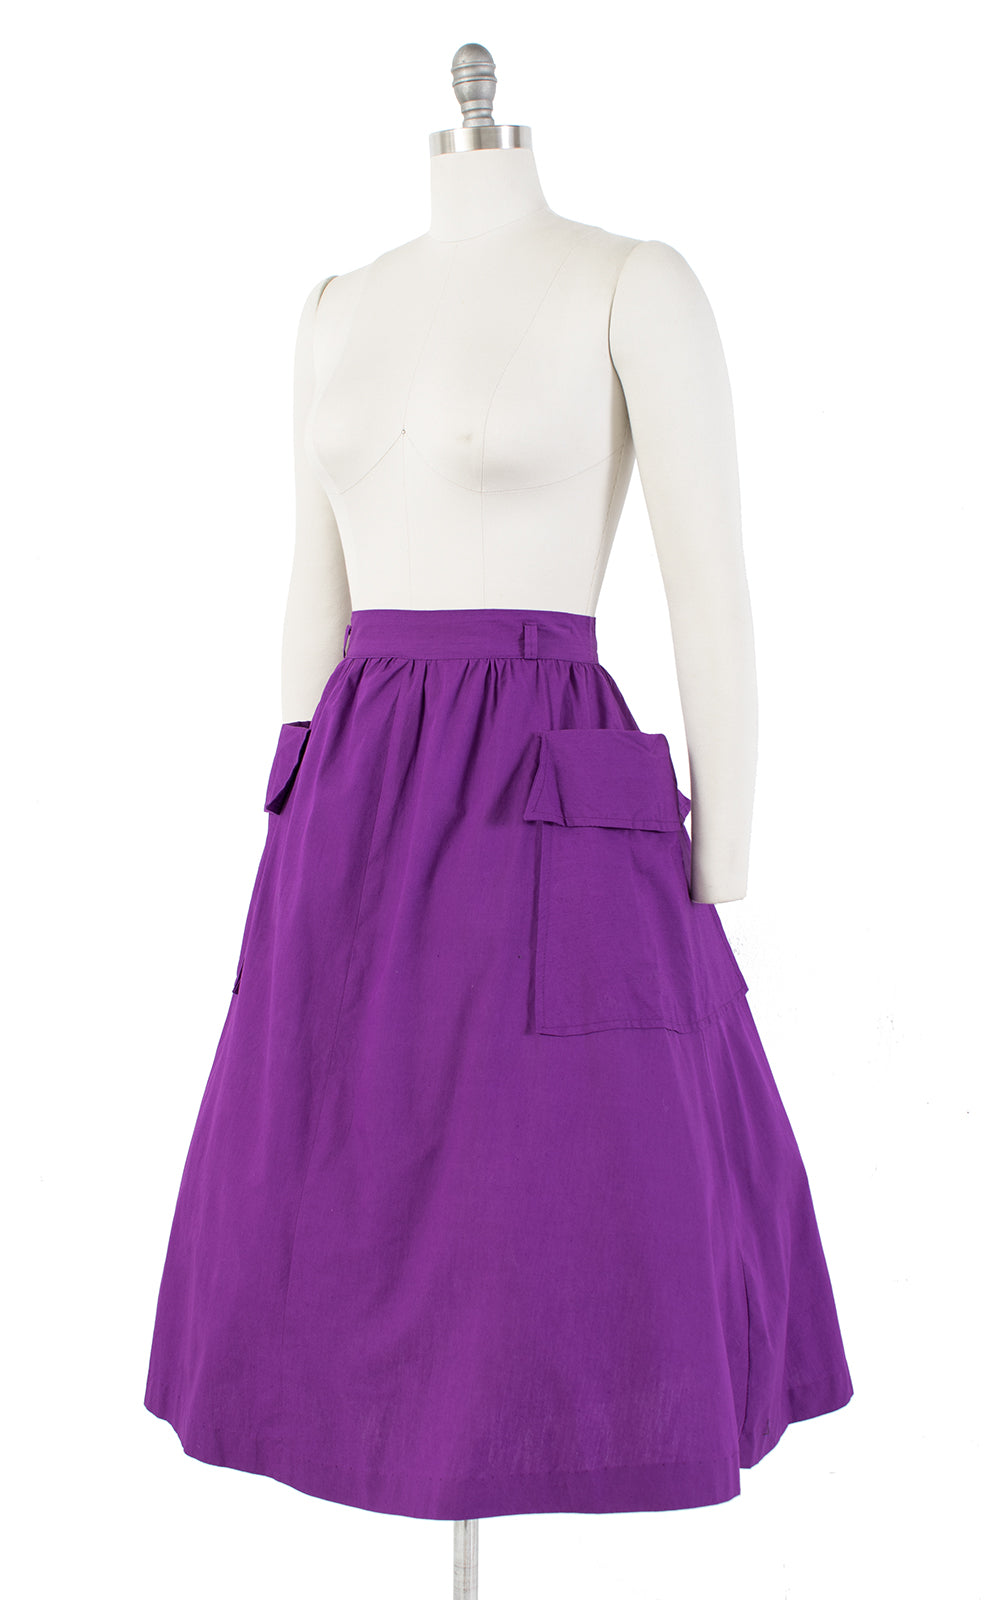 1950s Royal Purple Cotton Full Skirt with Big Pockets | medium